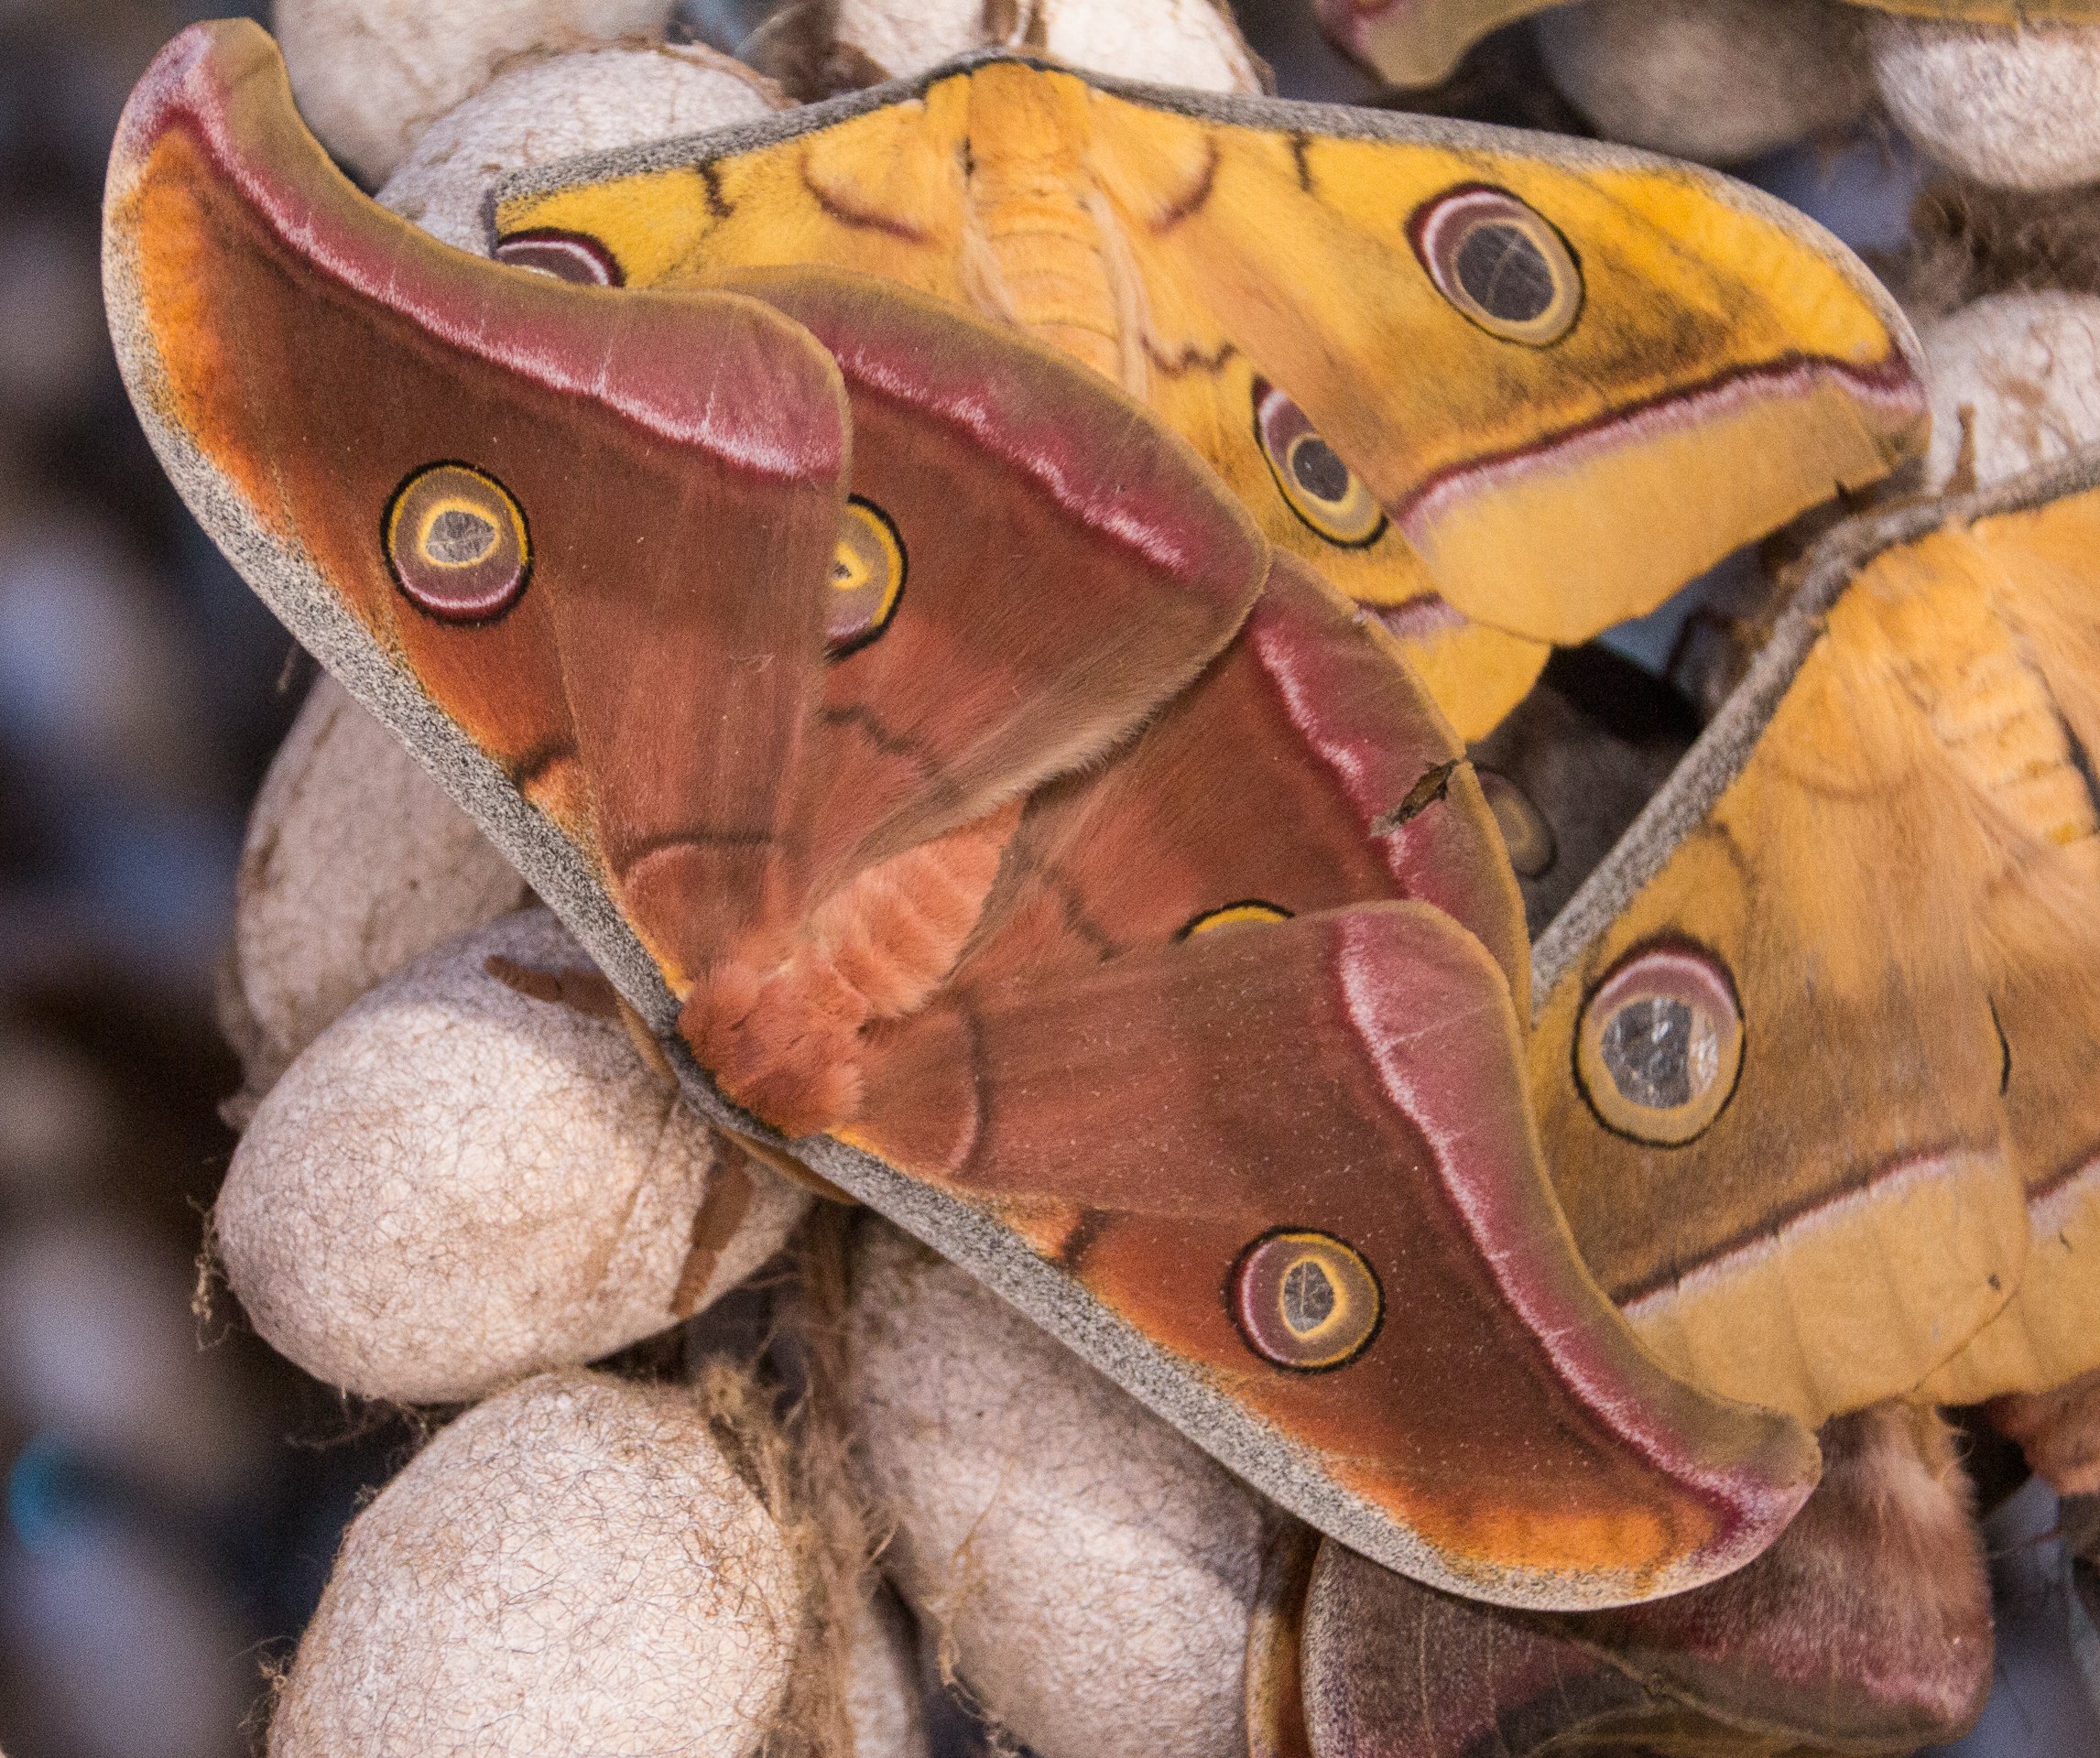 adult tussah moths (Antheraea sp.)